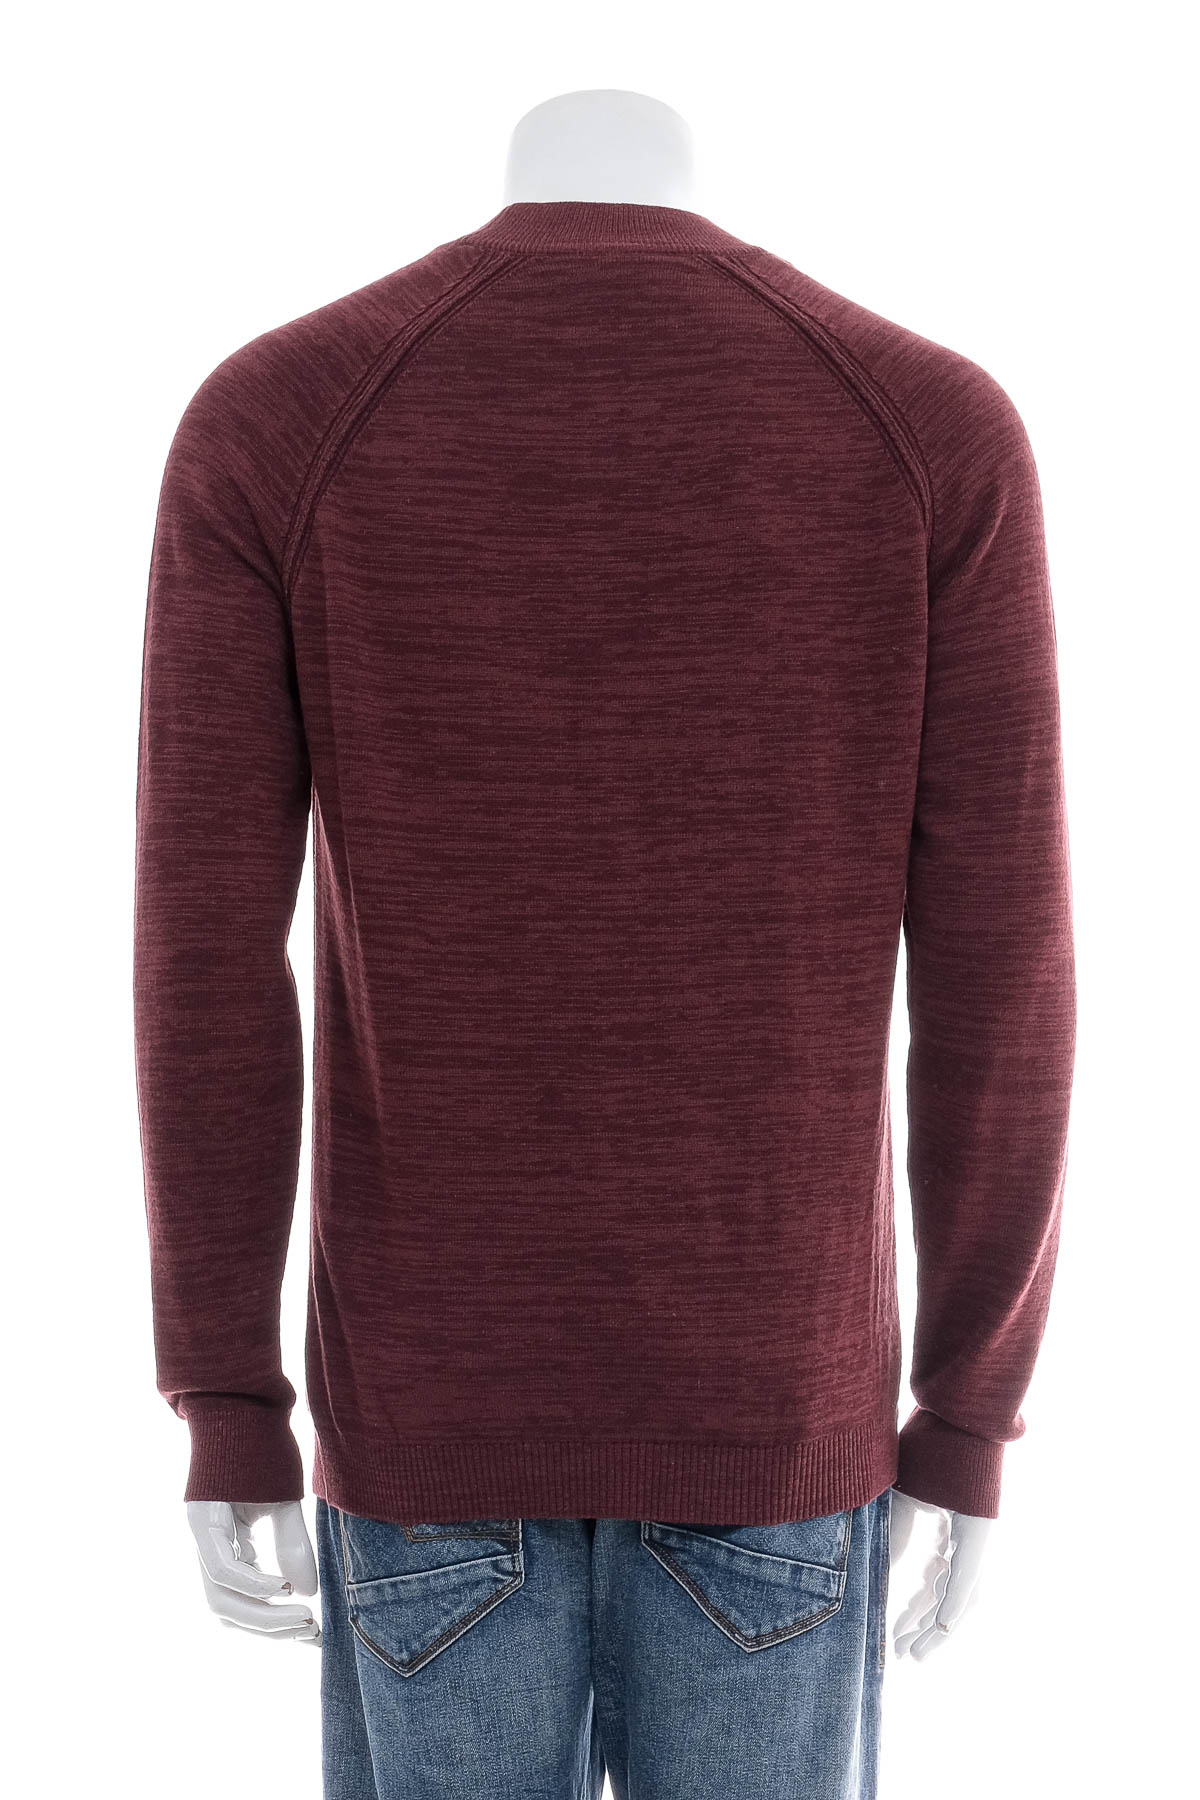 Men's sweater - Cast Iron - 1